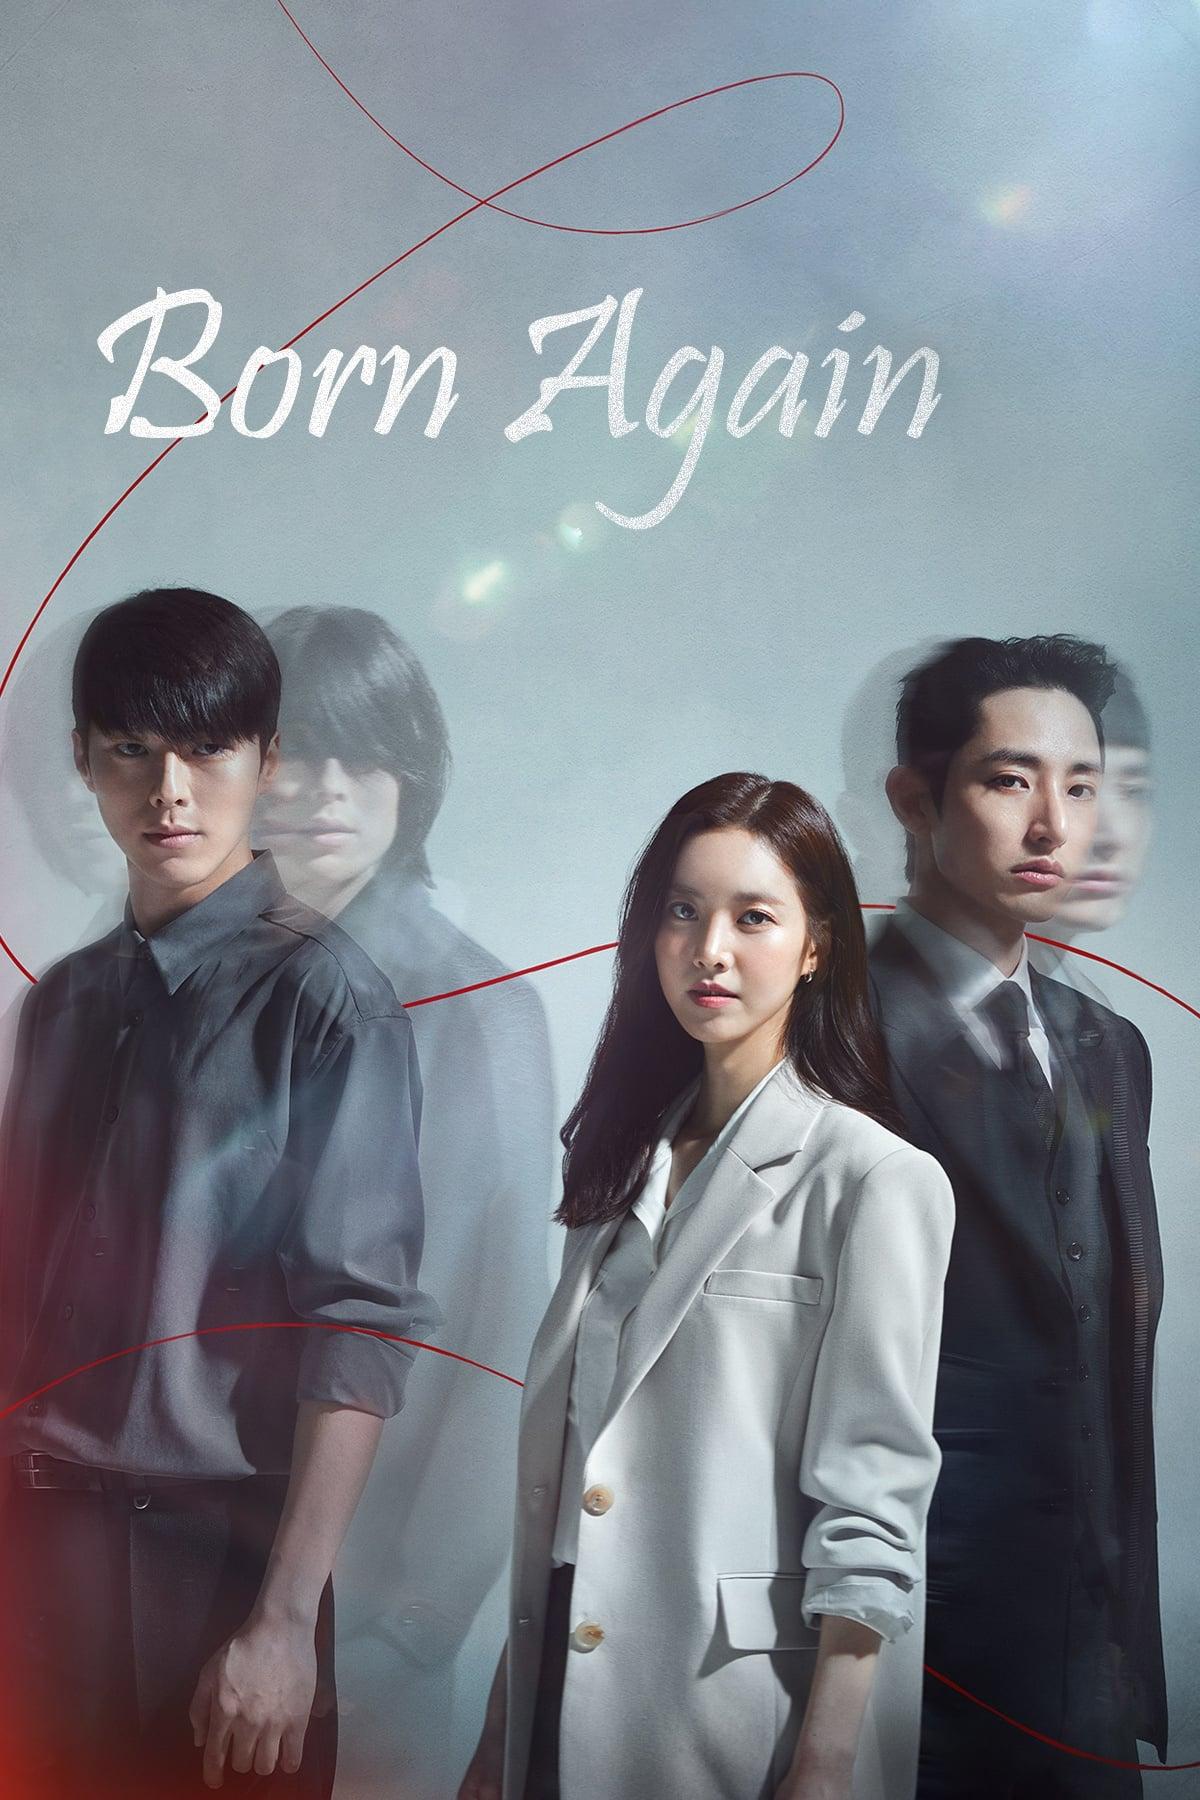 Born Again poster